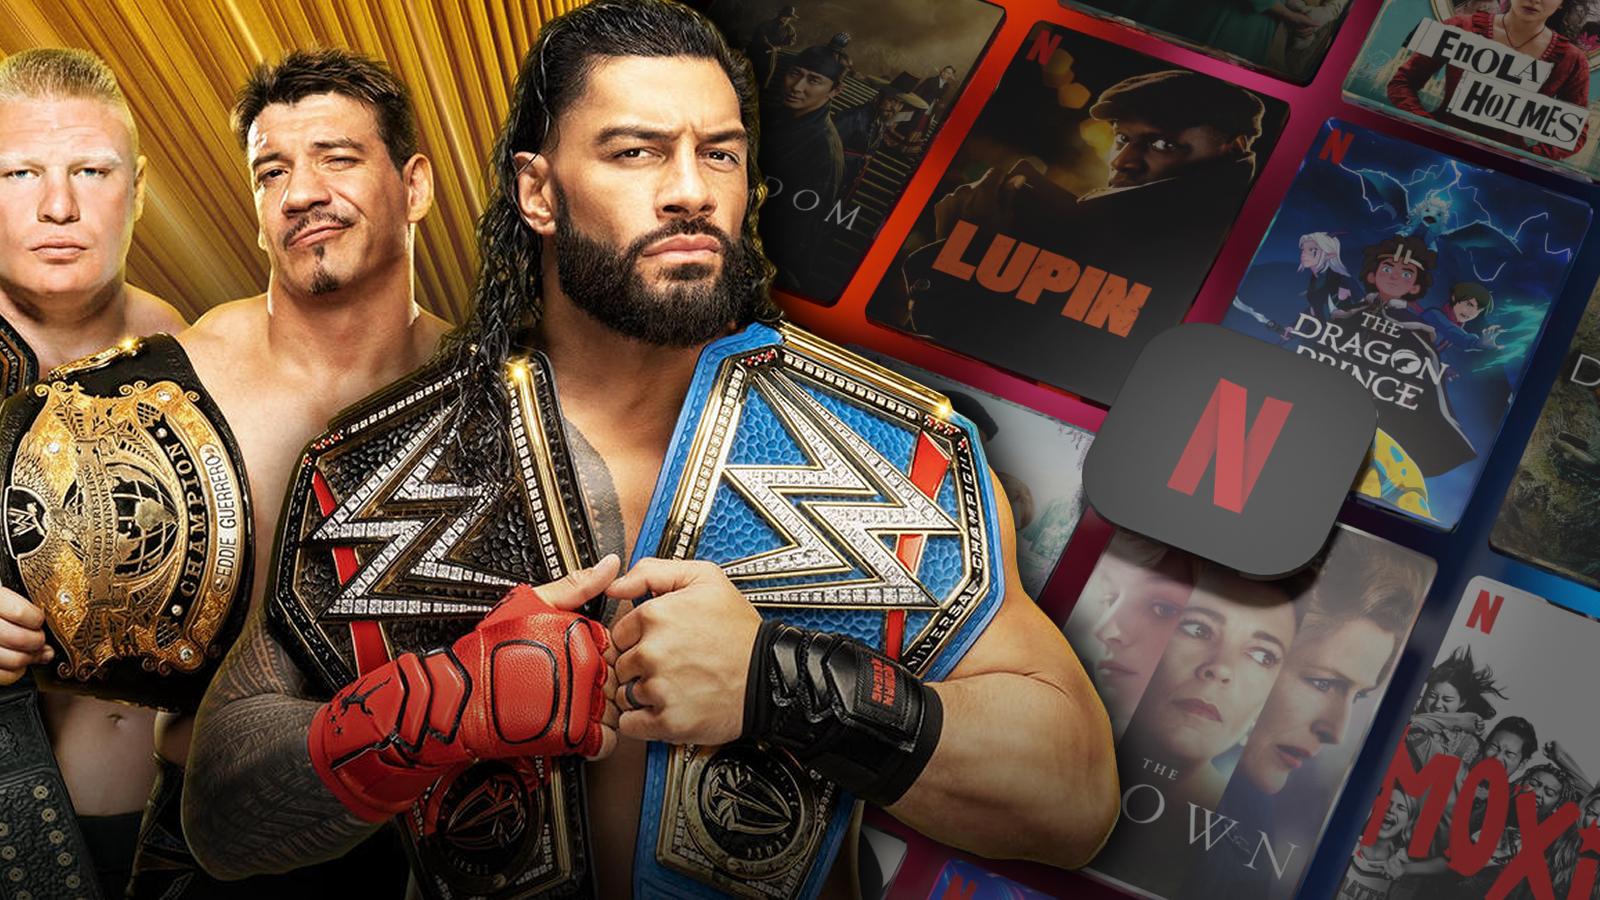 WWE superstars and Netflix promo artwork